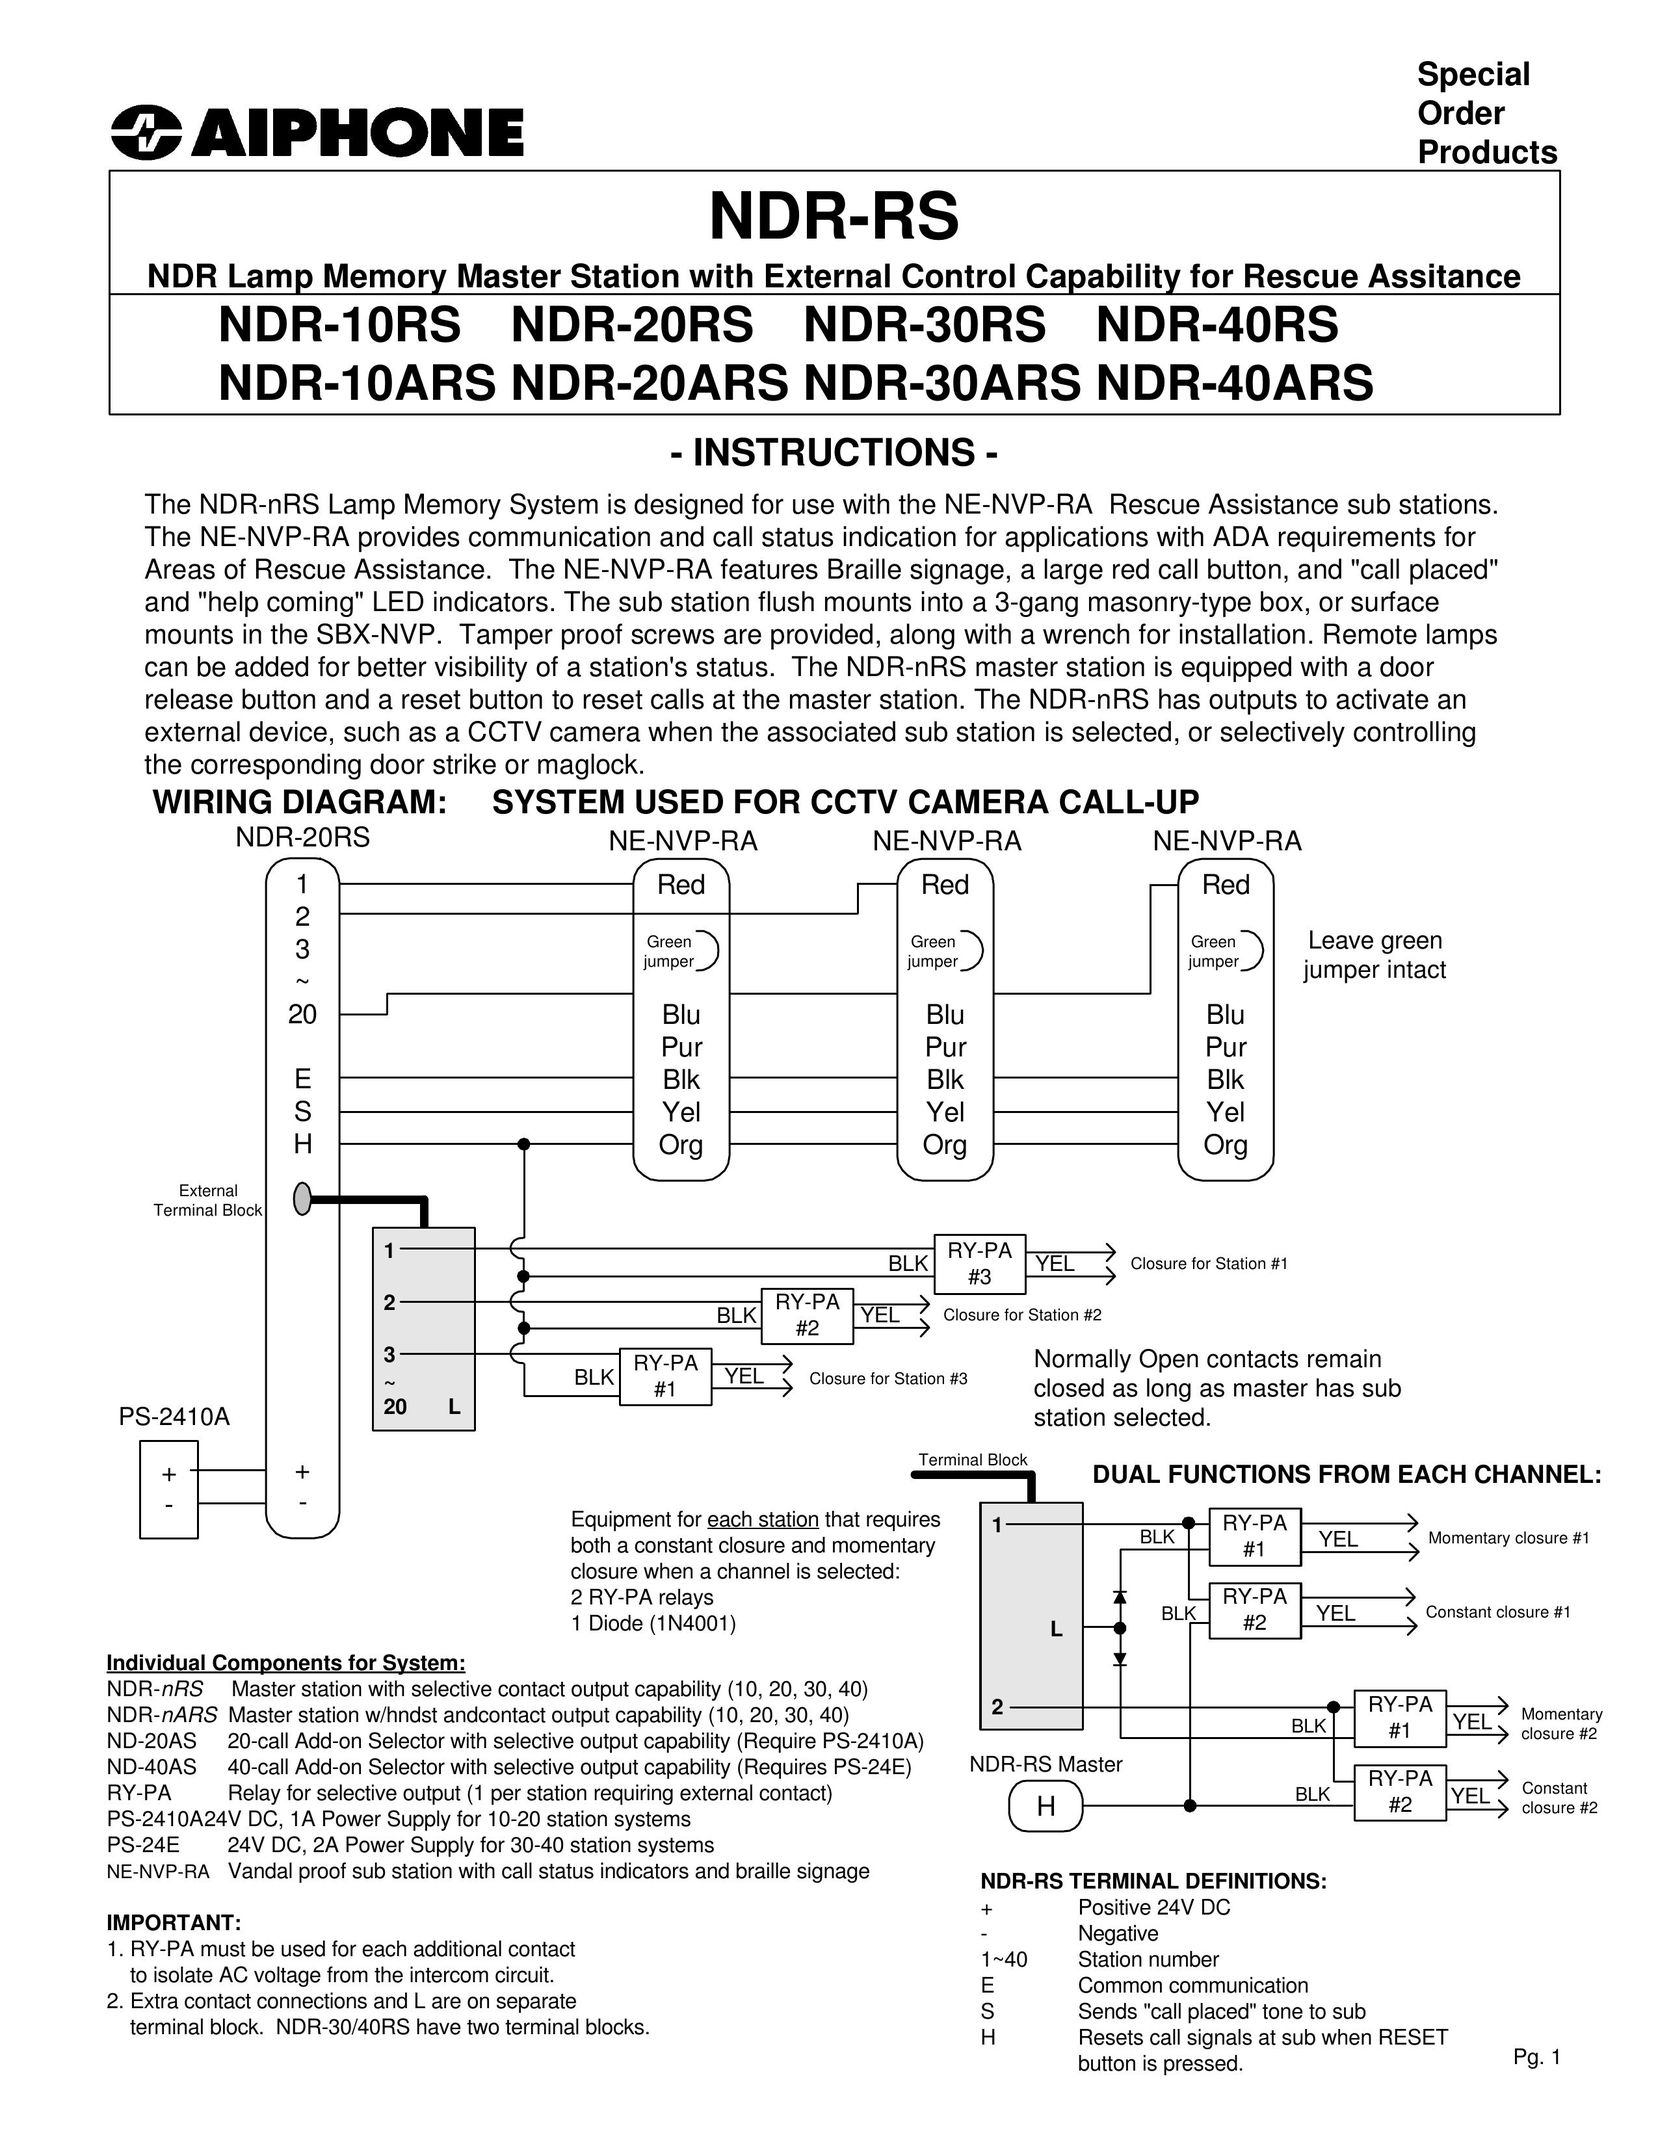 Aiphone NDR-30RS Telephone User Manual